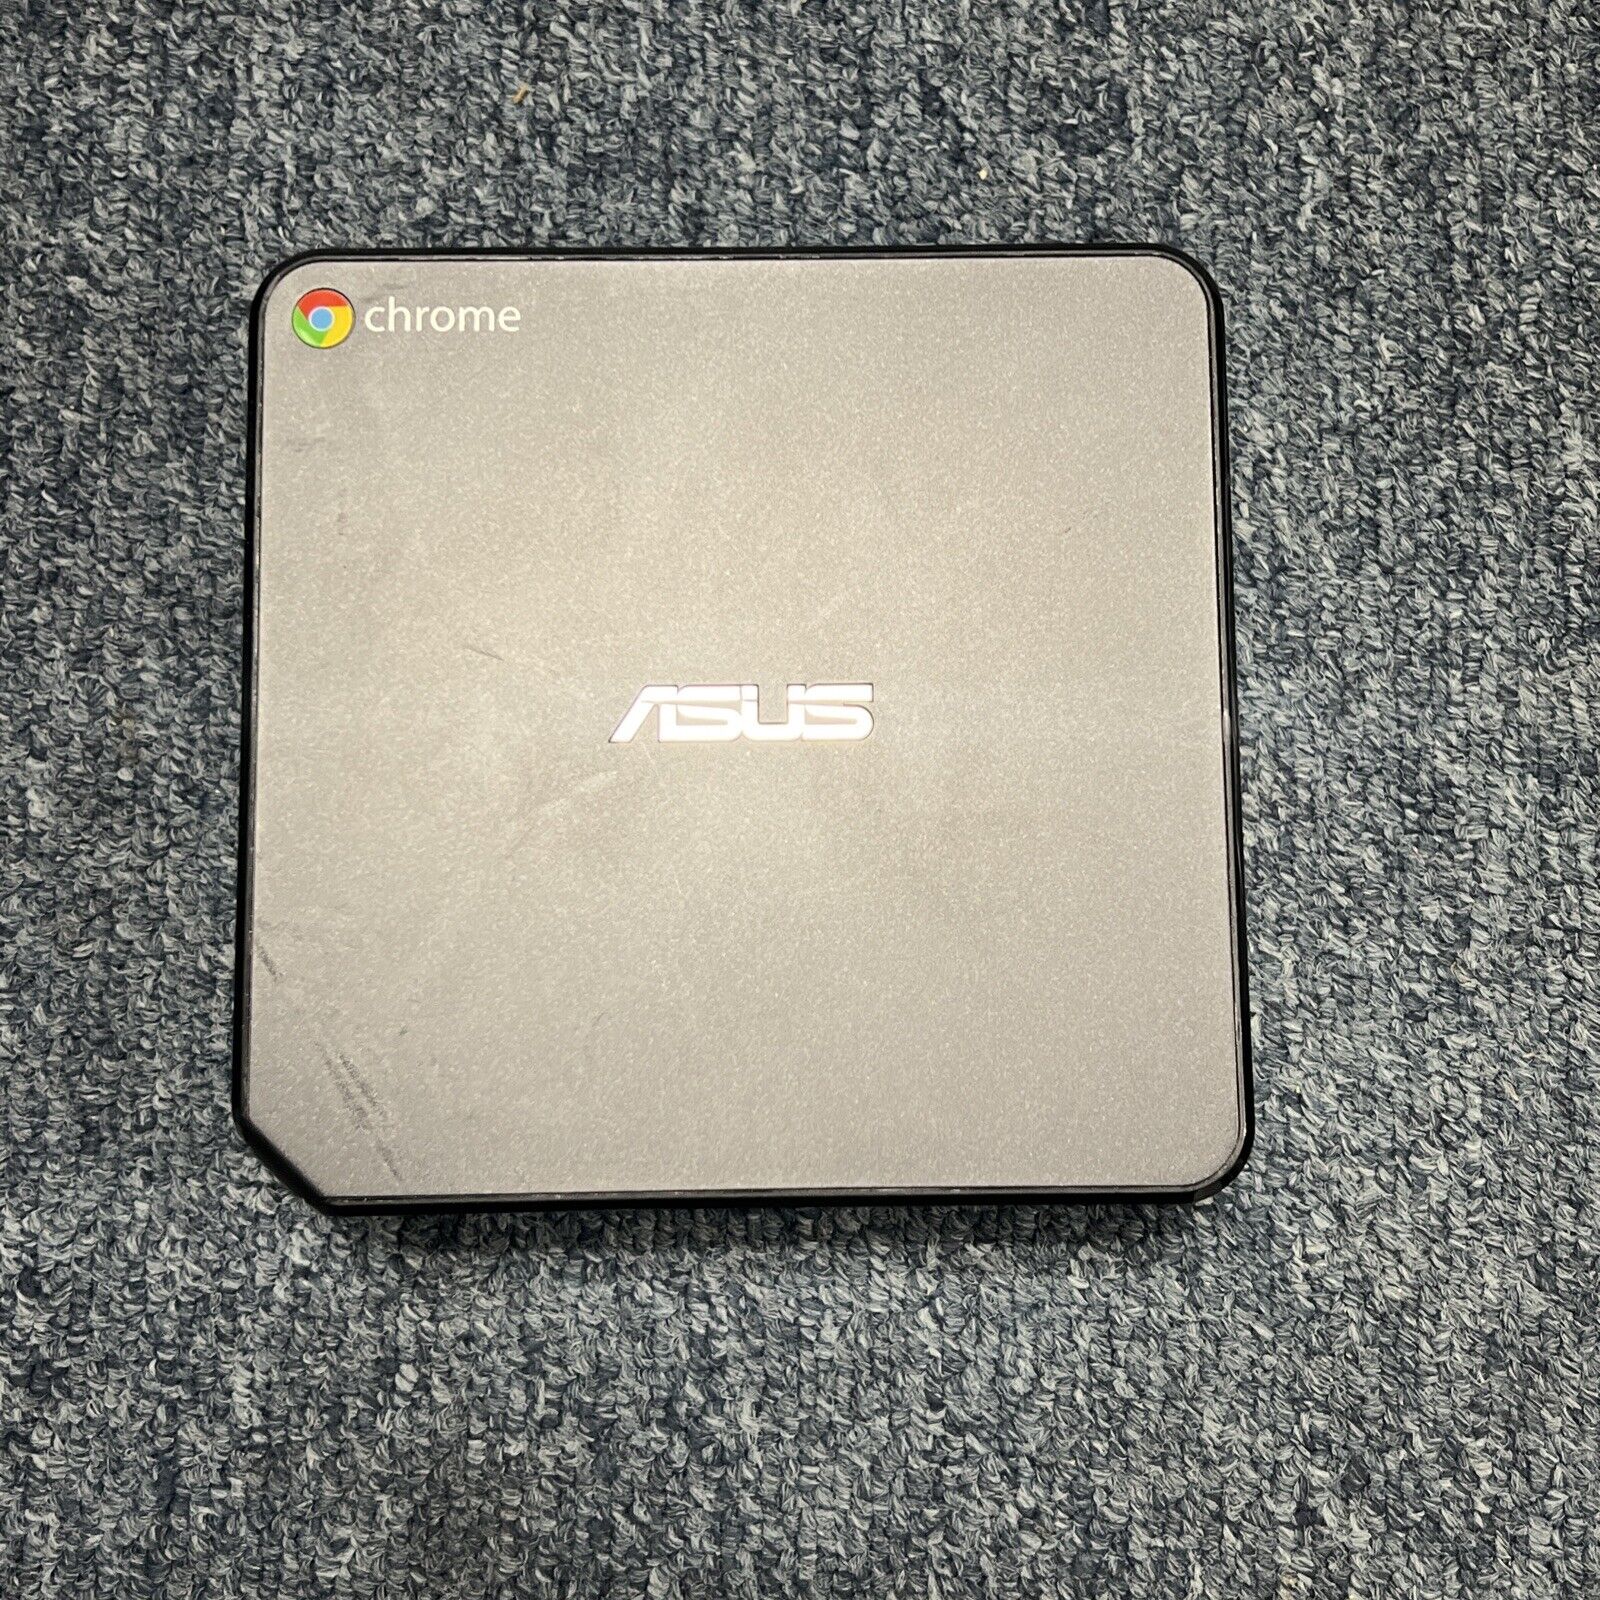 Asus Chromebox CN62 Mini Desktop Intel Celeron 3215U@1.7GHz, 4GB RAM, 16GB SSD